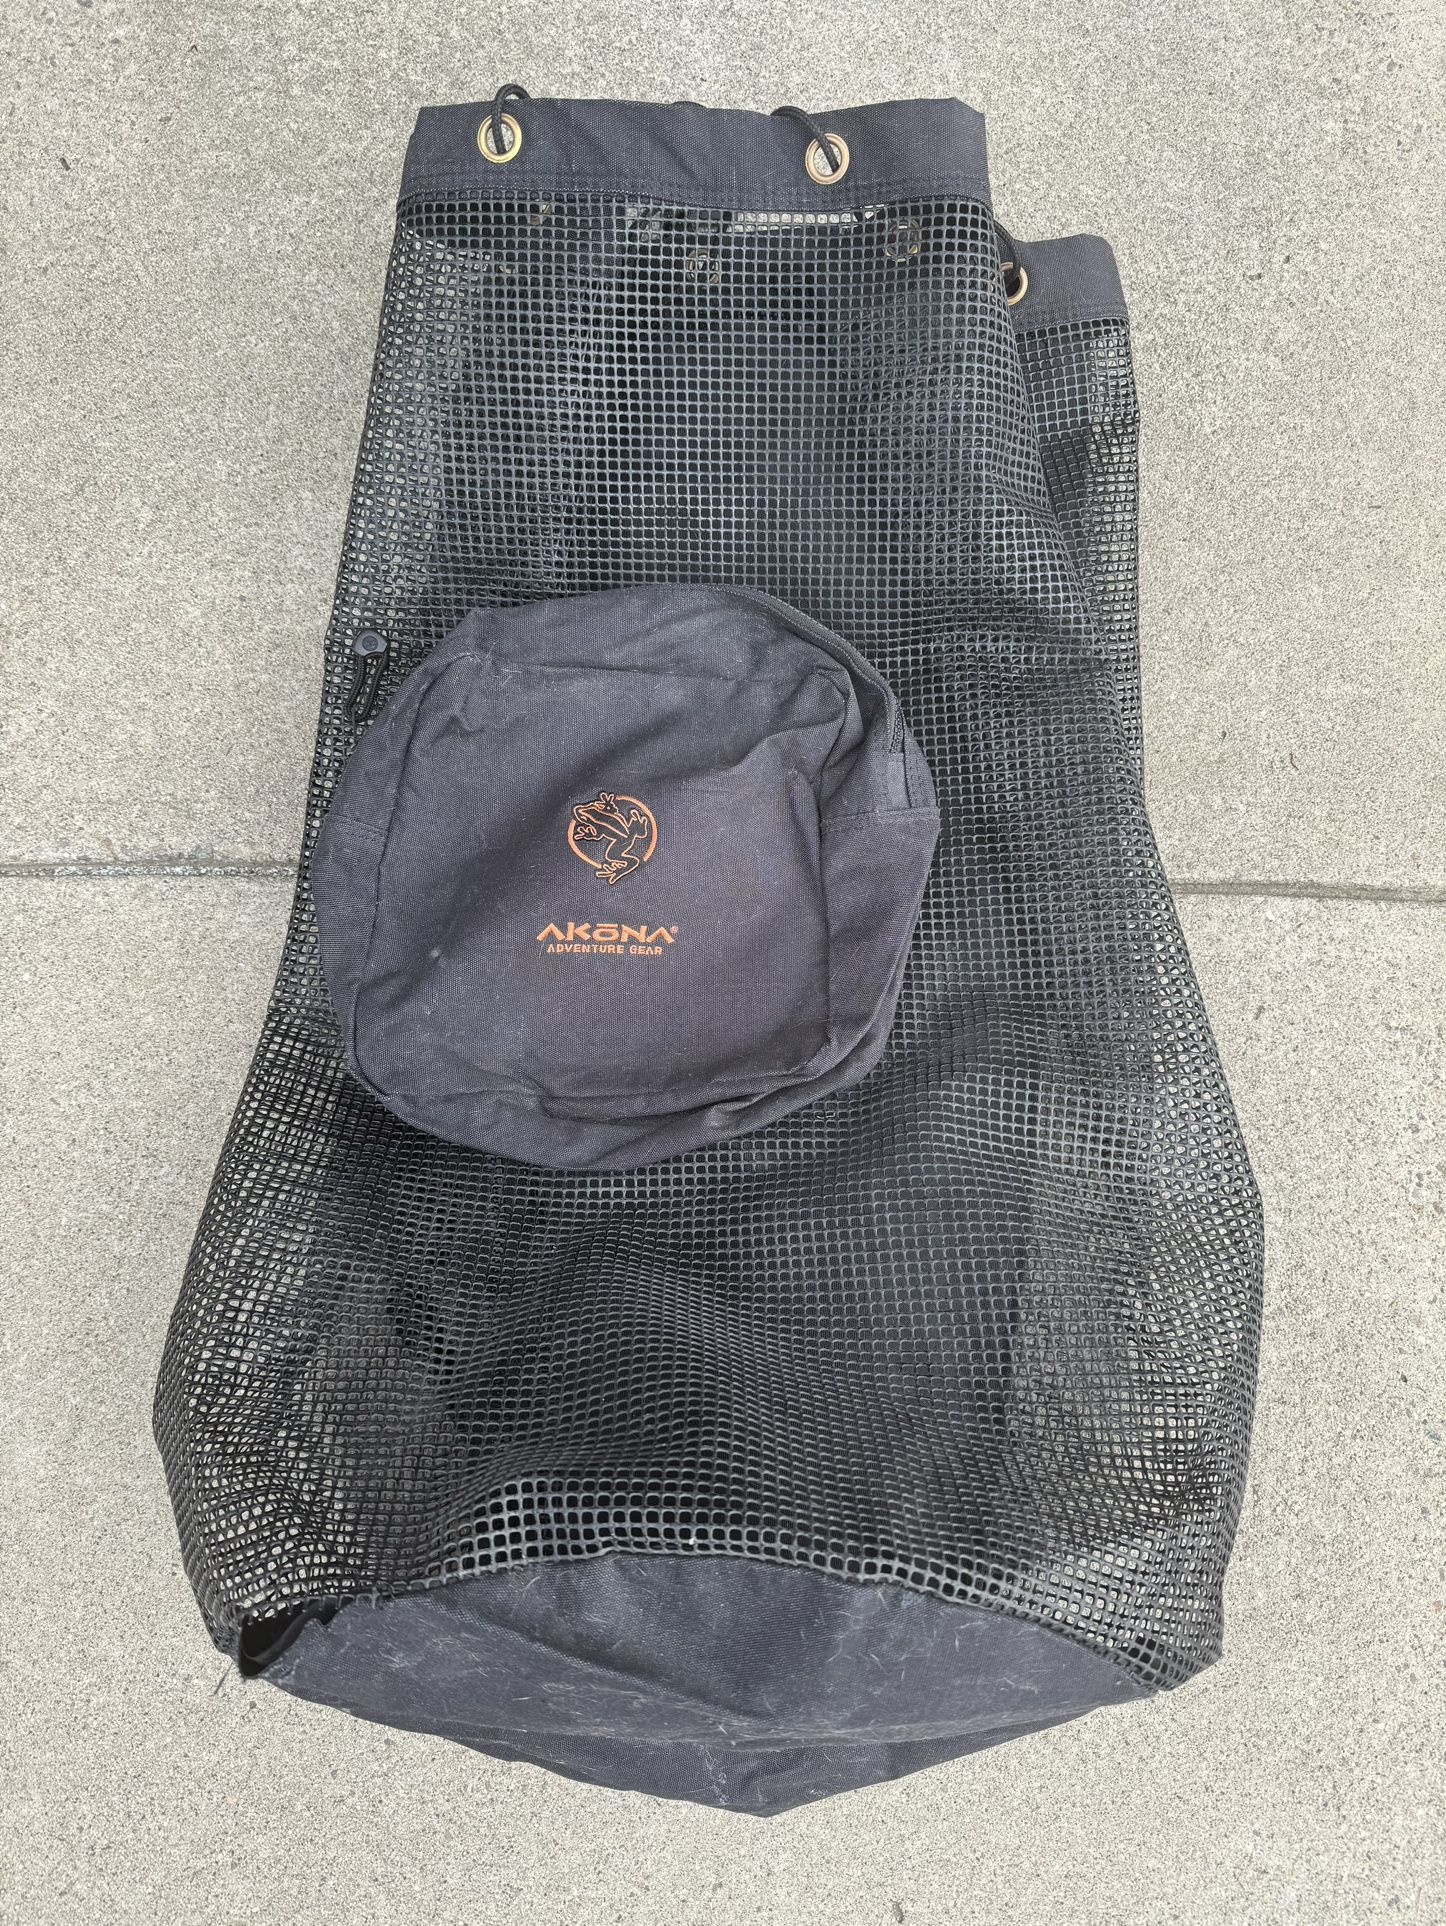 Akona Adventure Gear Dive Bag / Backpack